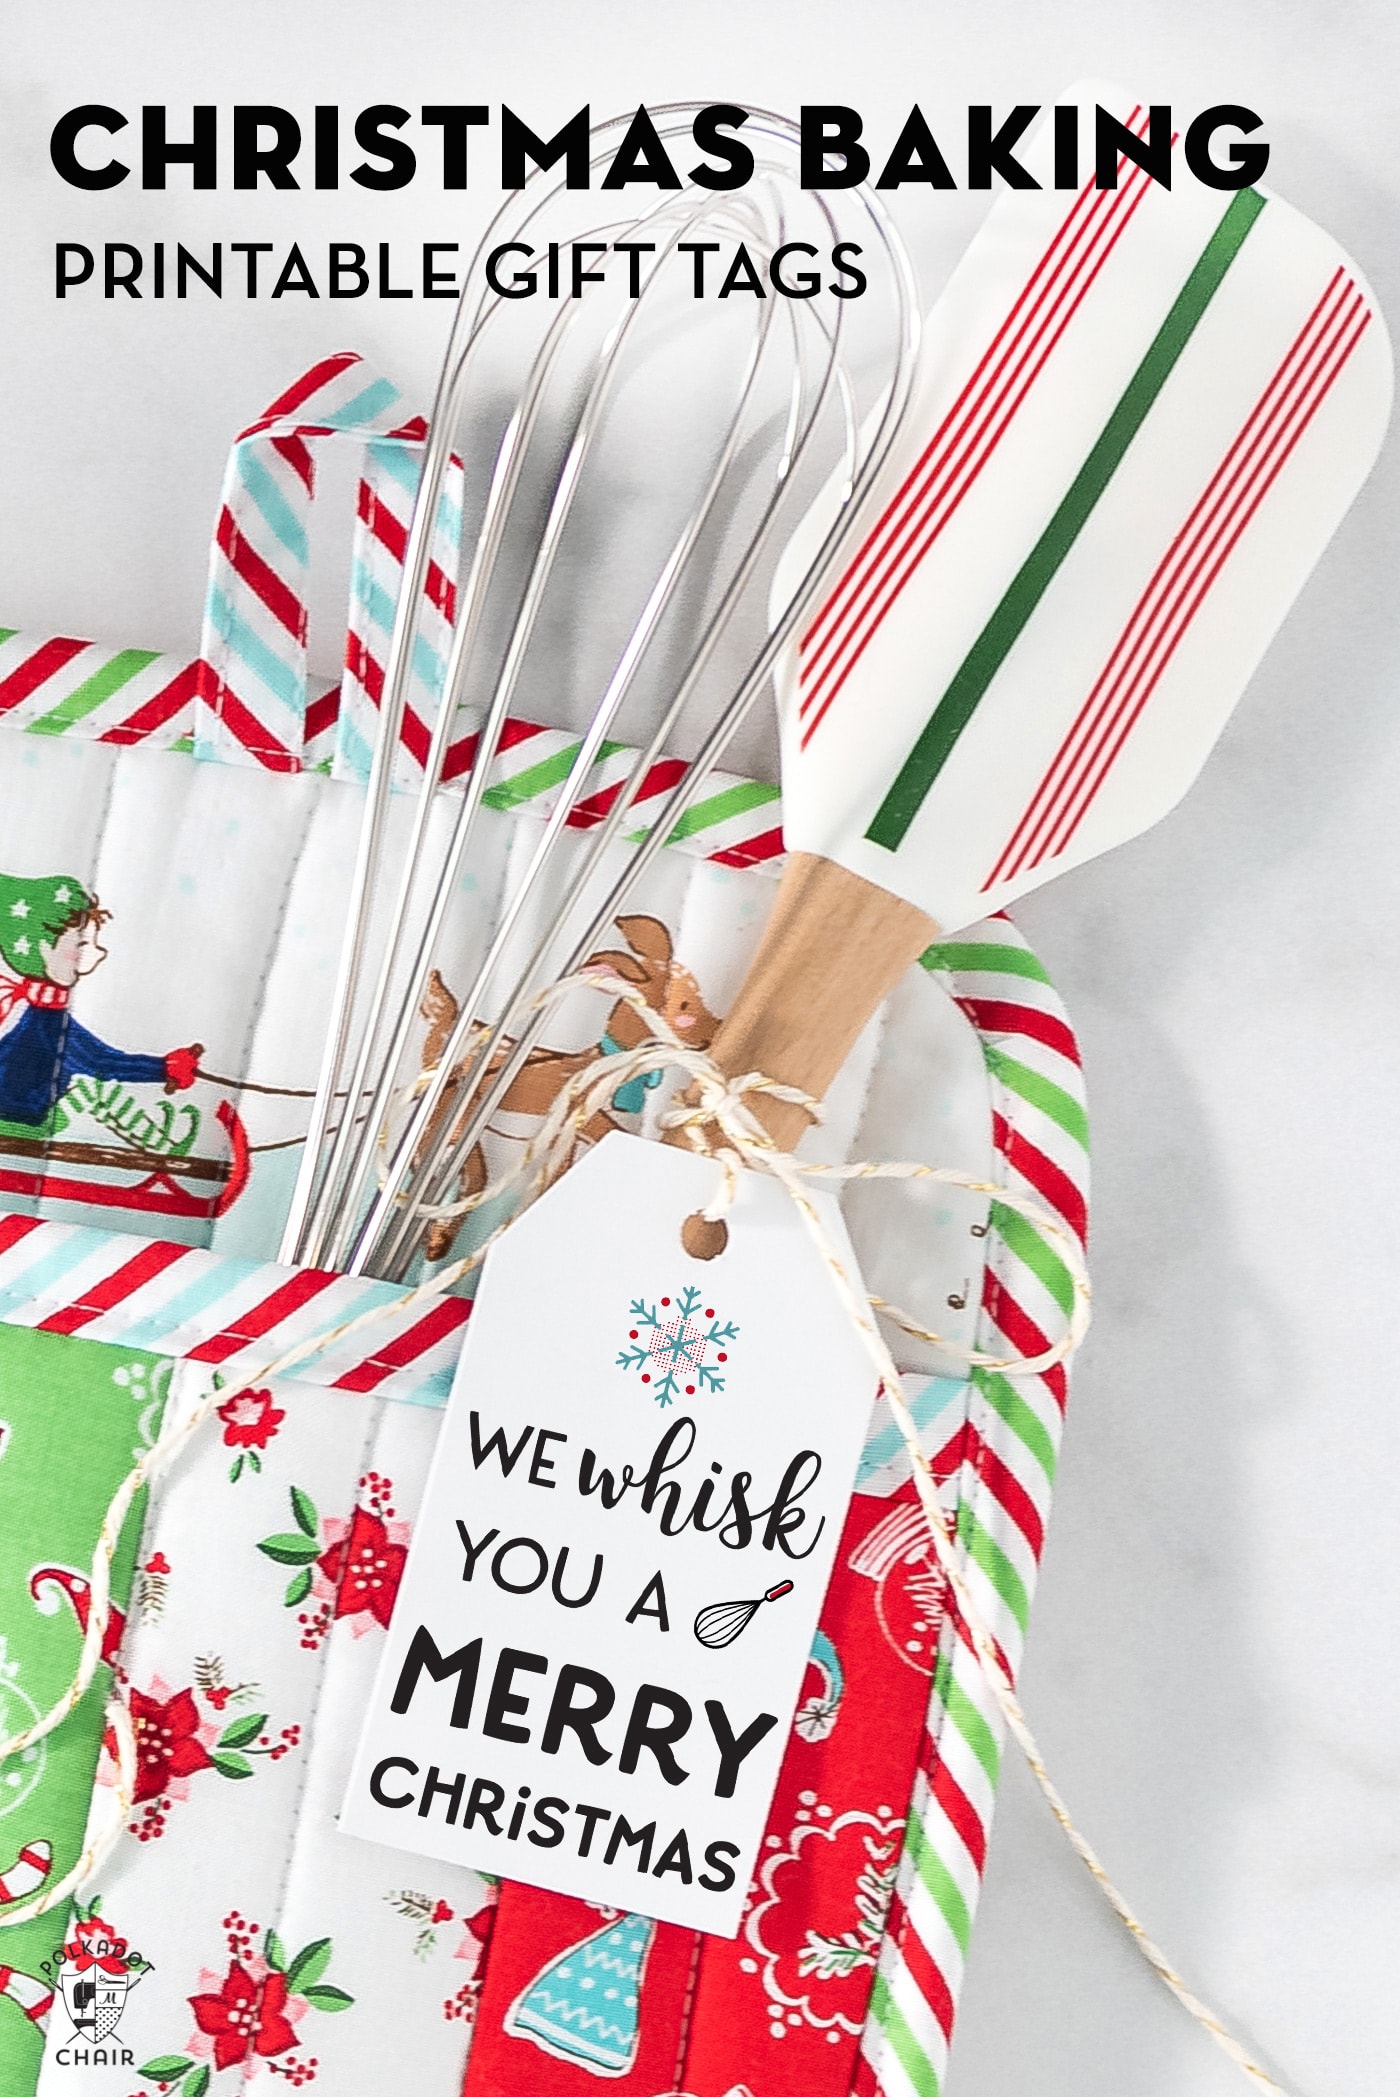 https://www.polkadotchair.com/wp-content/uploads/2019/12/CHRISTMAS-baking-printable-gift-tags.jpg